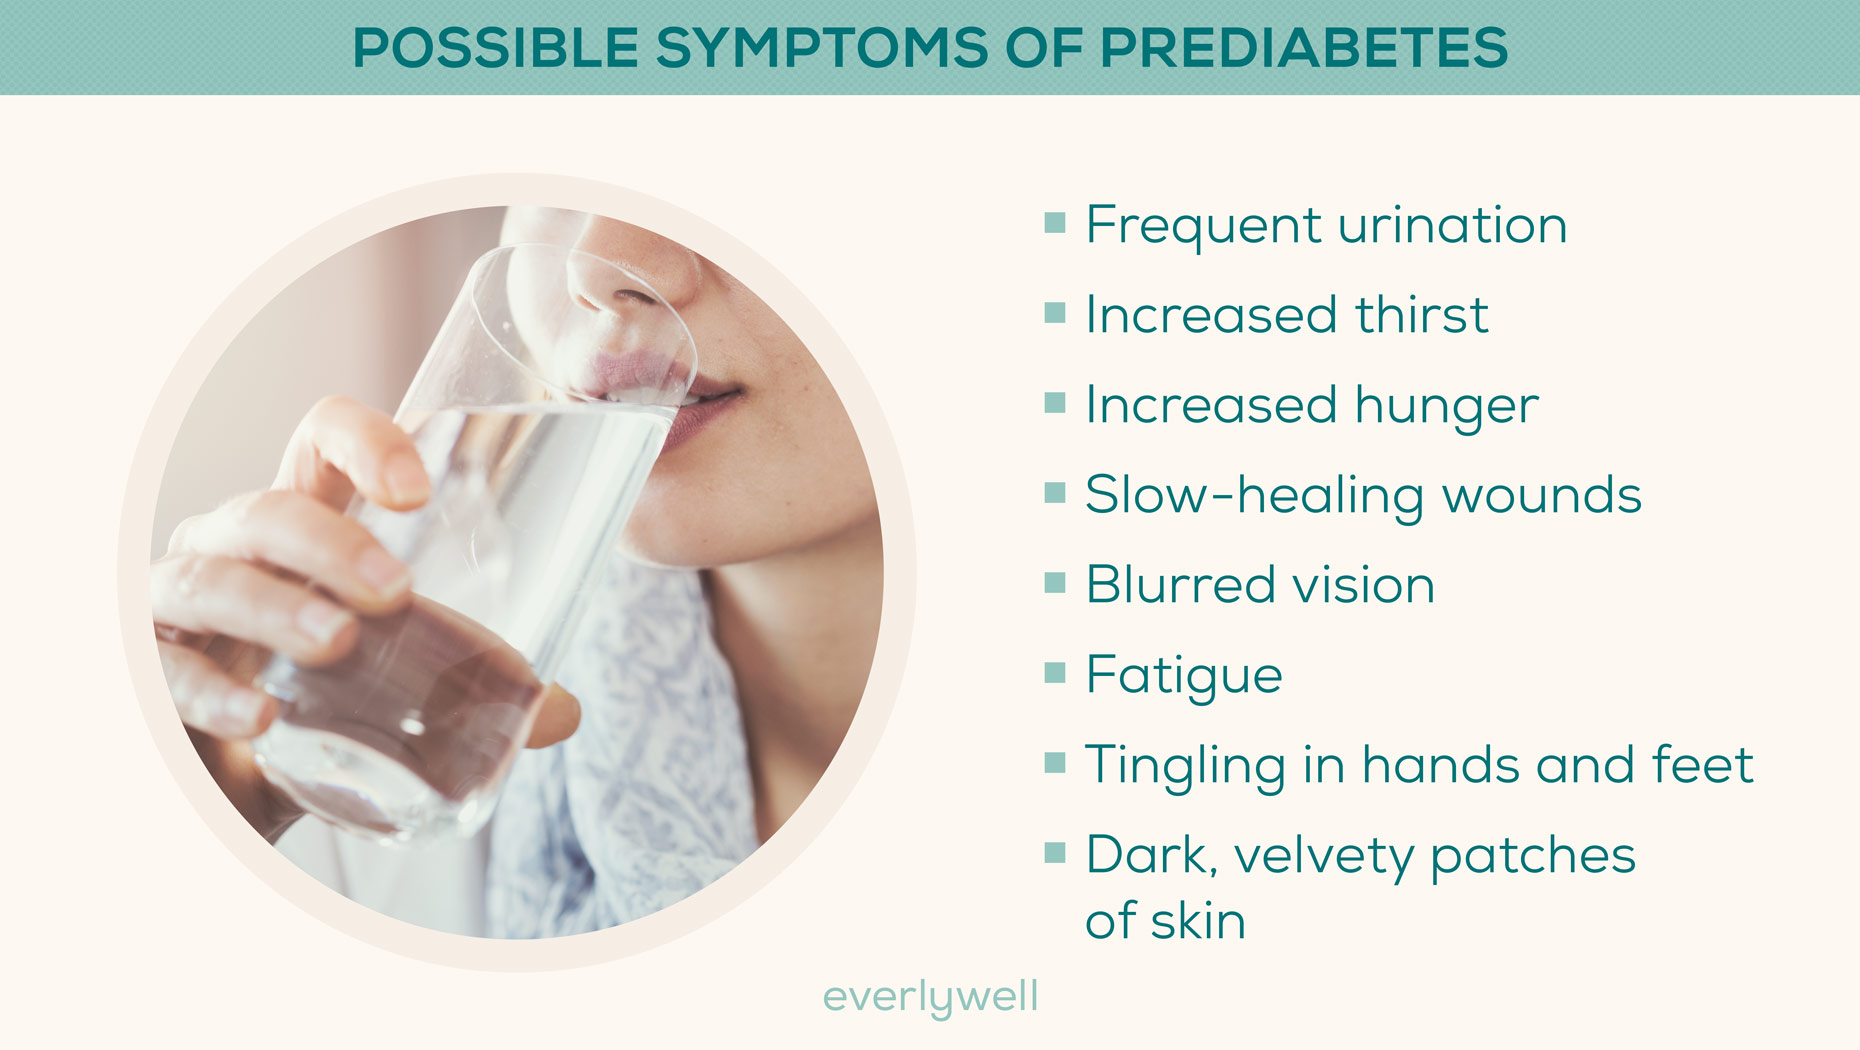 Prediabetes symptoms in adults